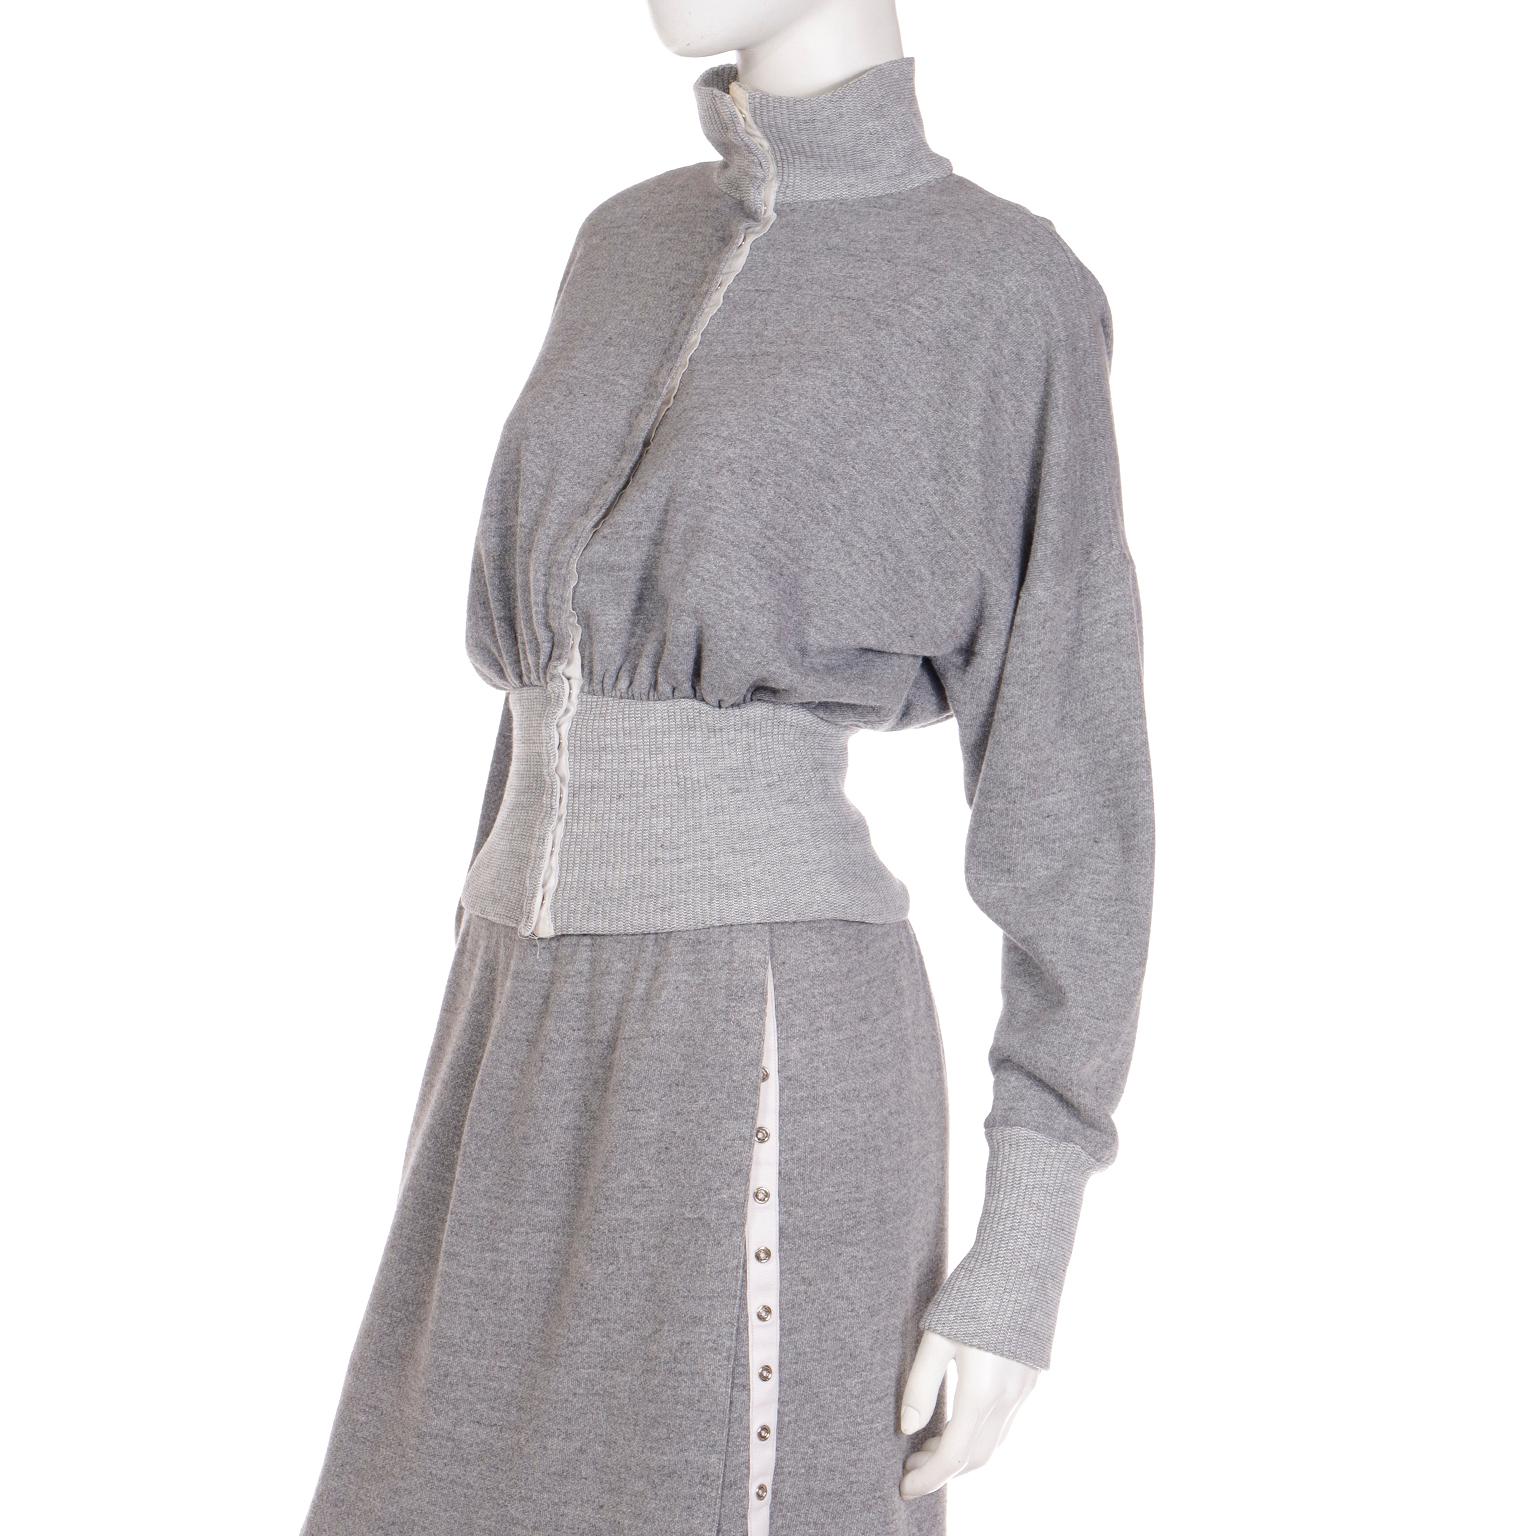 Norma Kamali 1980 Sweats Grey Sweatshirt 2 pc Dress w Snap Front Top & Skirt For Sale 3